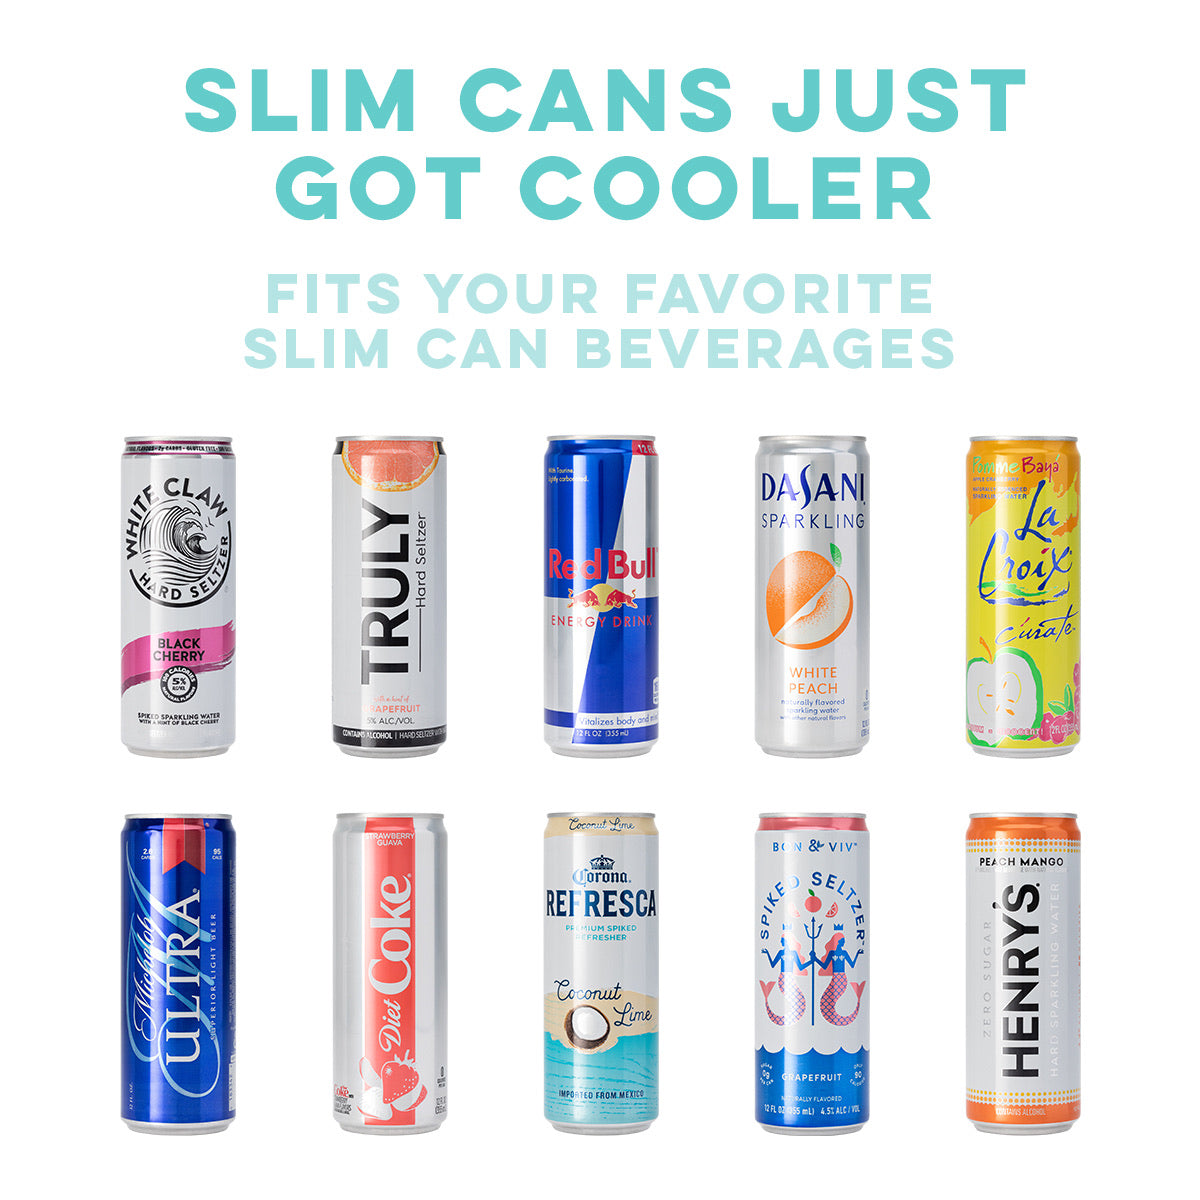 Swig 12oz Skinny Can Cooler